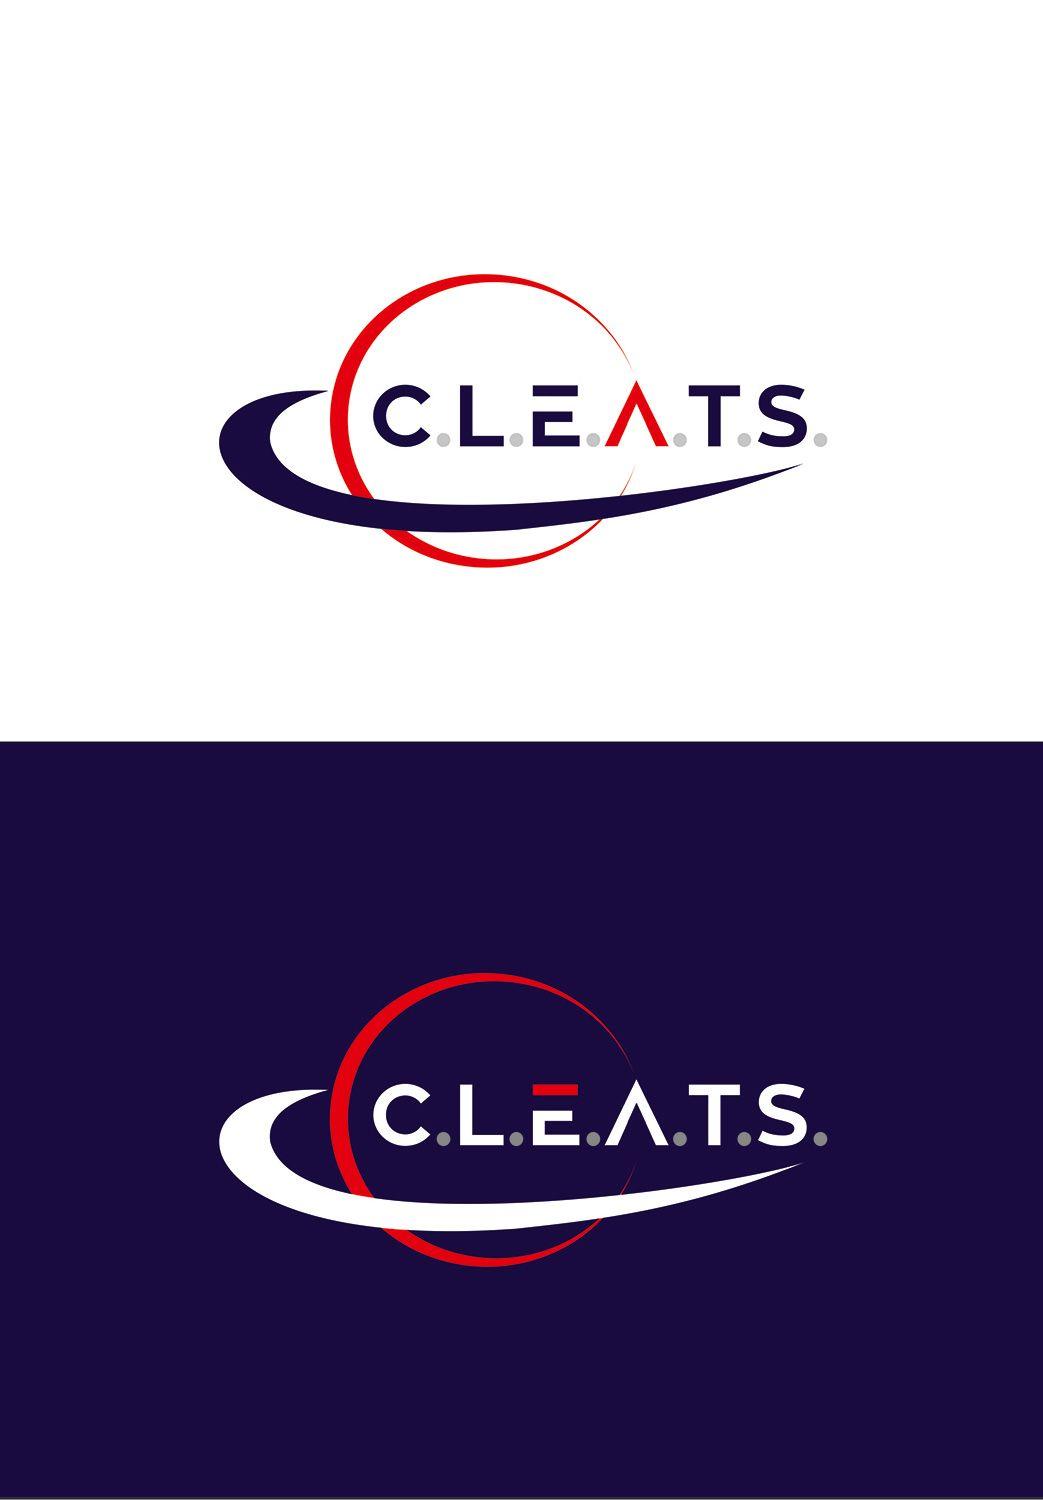 Cleats Logo - Elegant, Playful Logo Design for C.L.E.A.T.S. by Abaan. Design